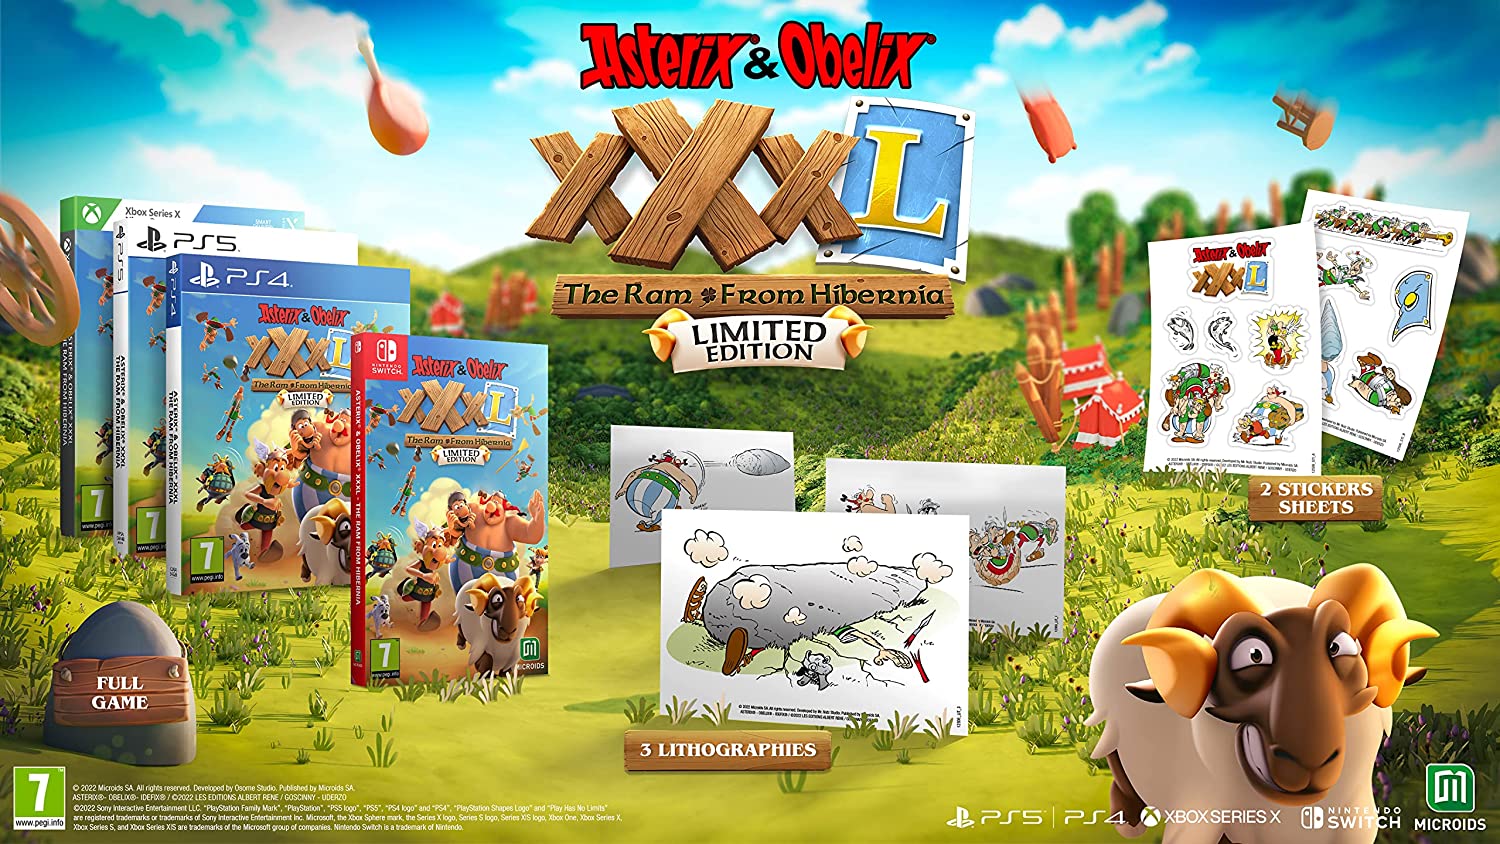 Скриншоты Asterix & Obelix XXXL: The Ram from Hibernia - Limited Edition [Nintendo Switch, русская версия] интернет-магазин Омегагейм